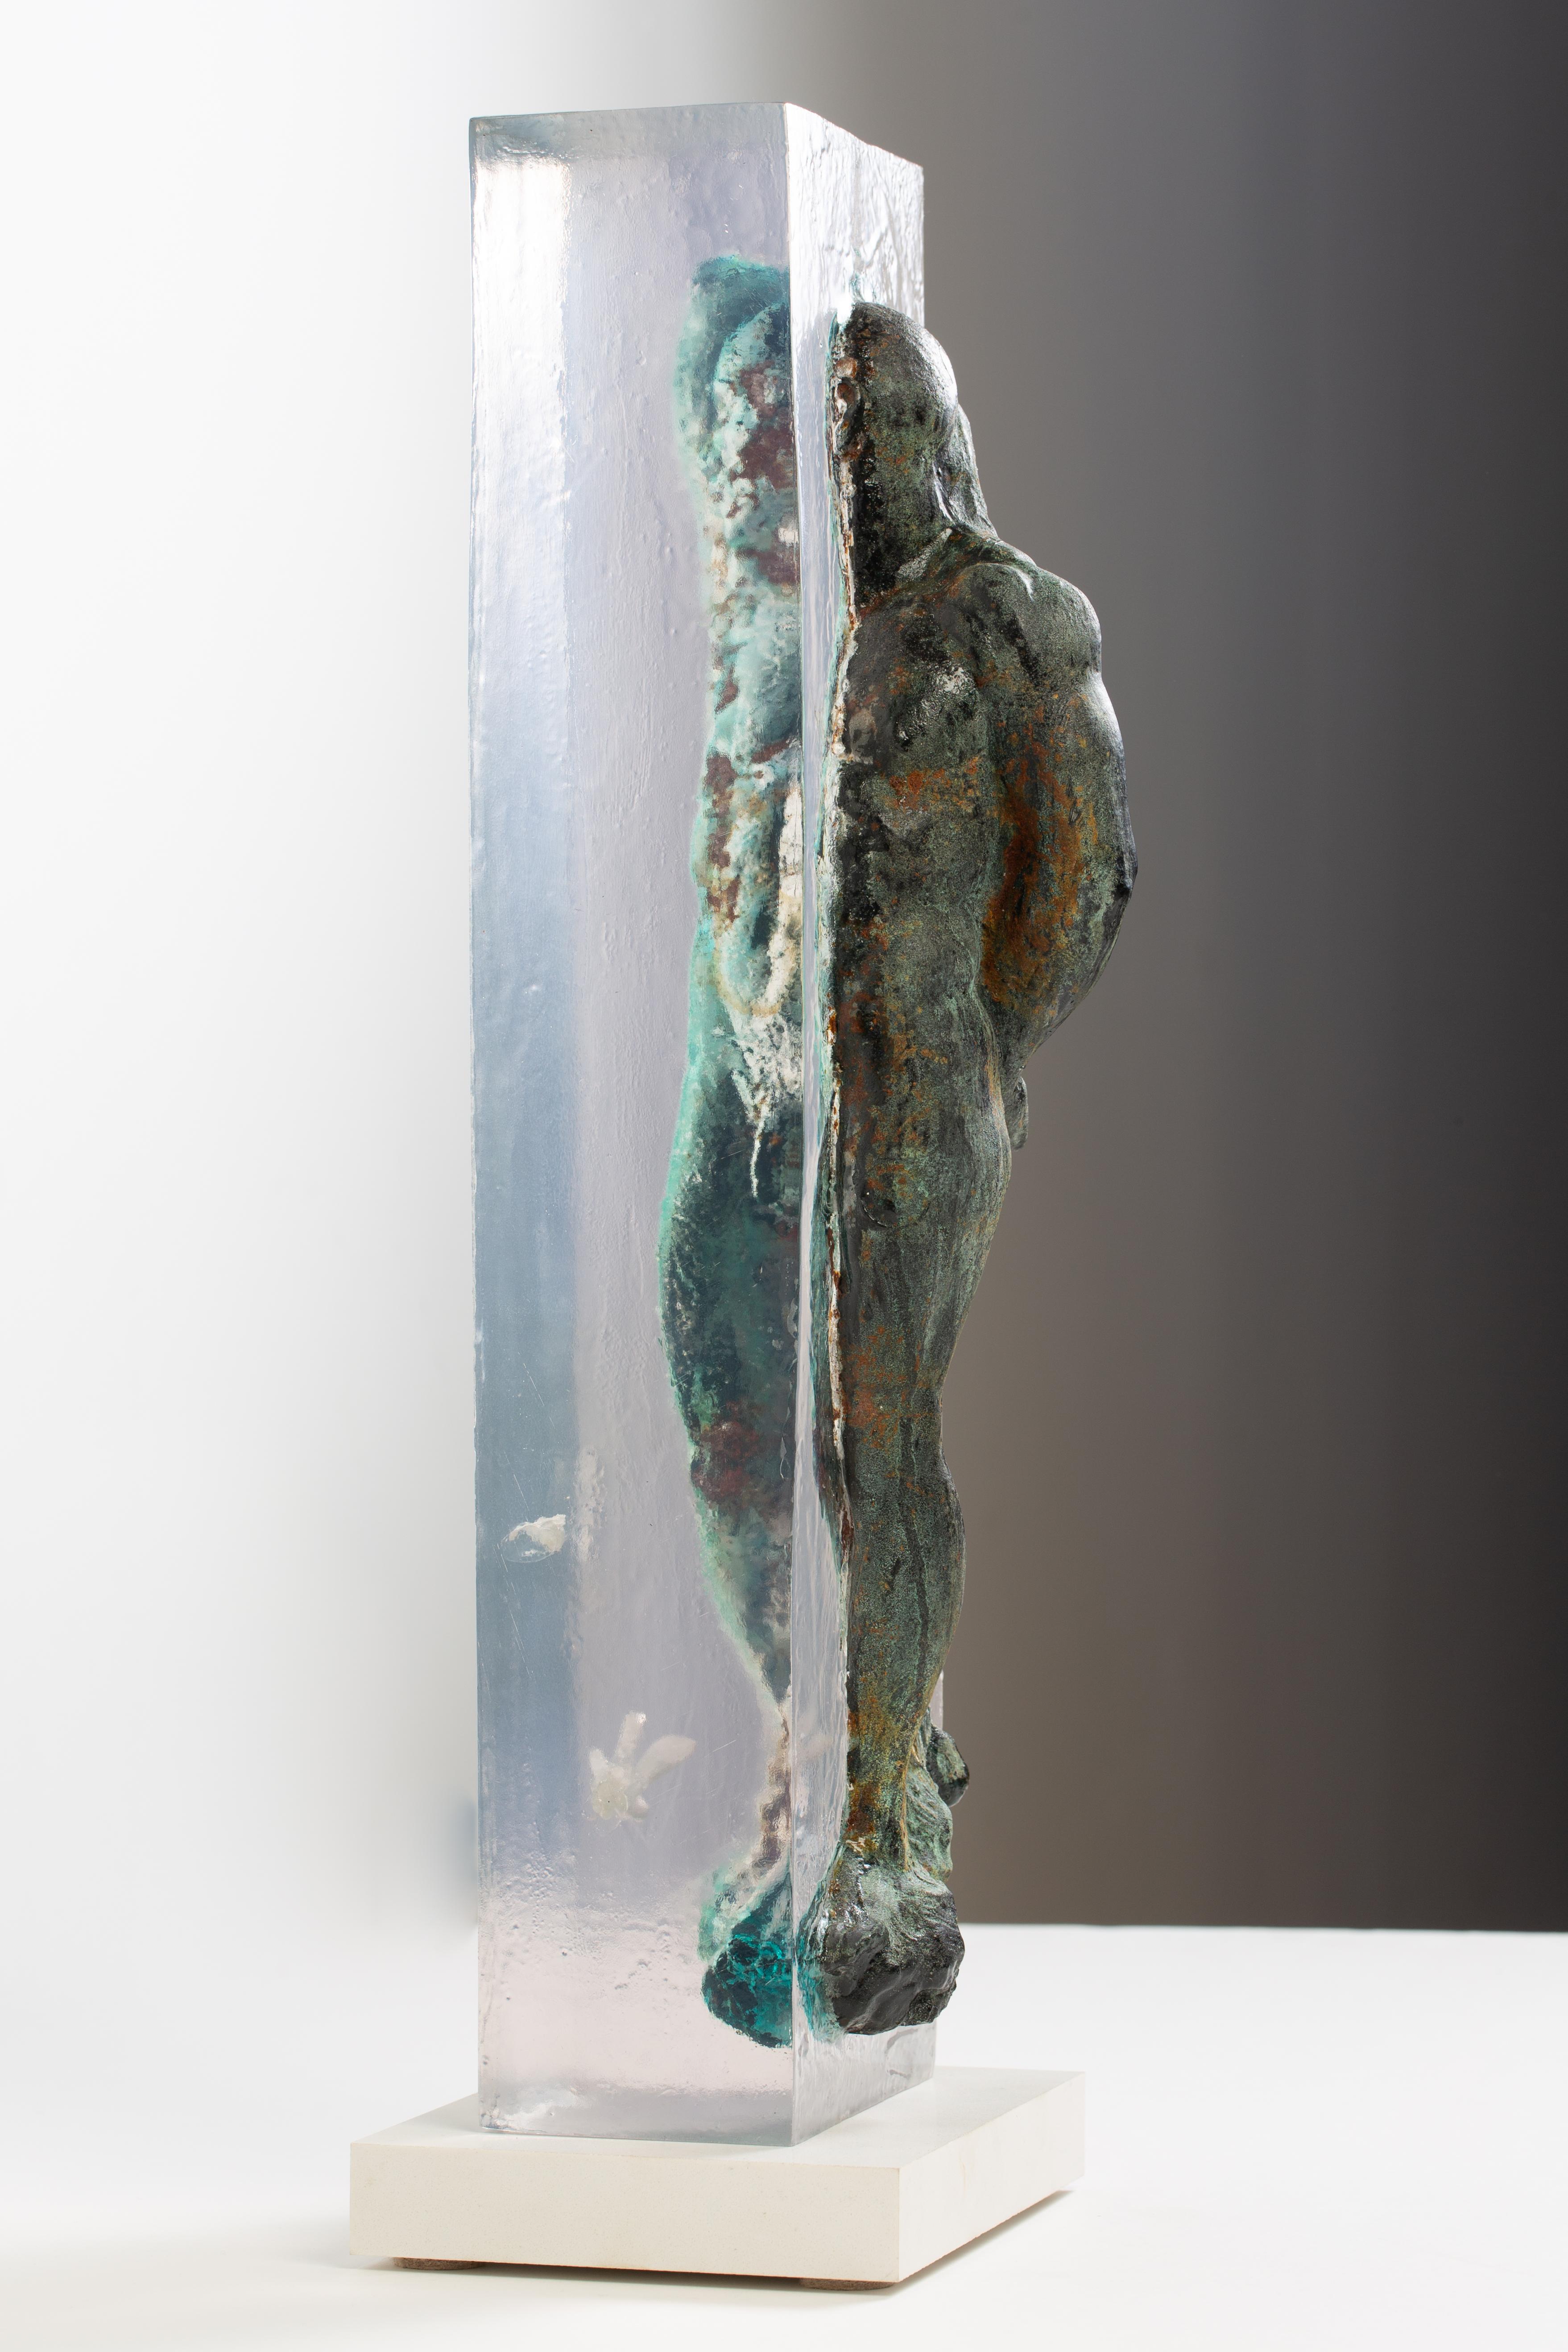 Embedded Slave - After Michelangelo, Sculpture Half Embedded in Clear Resin 2